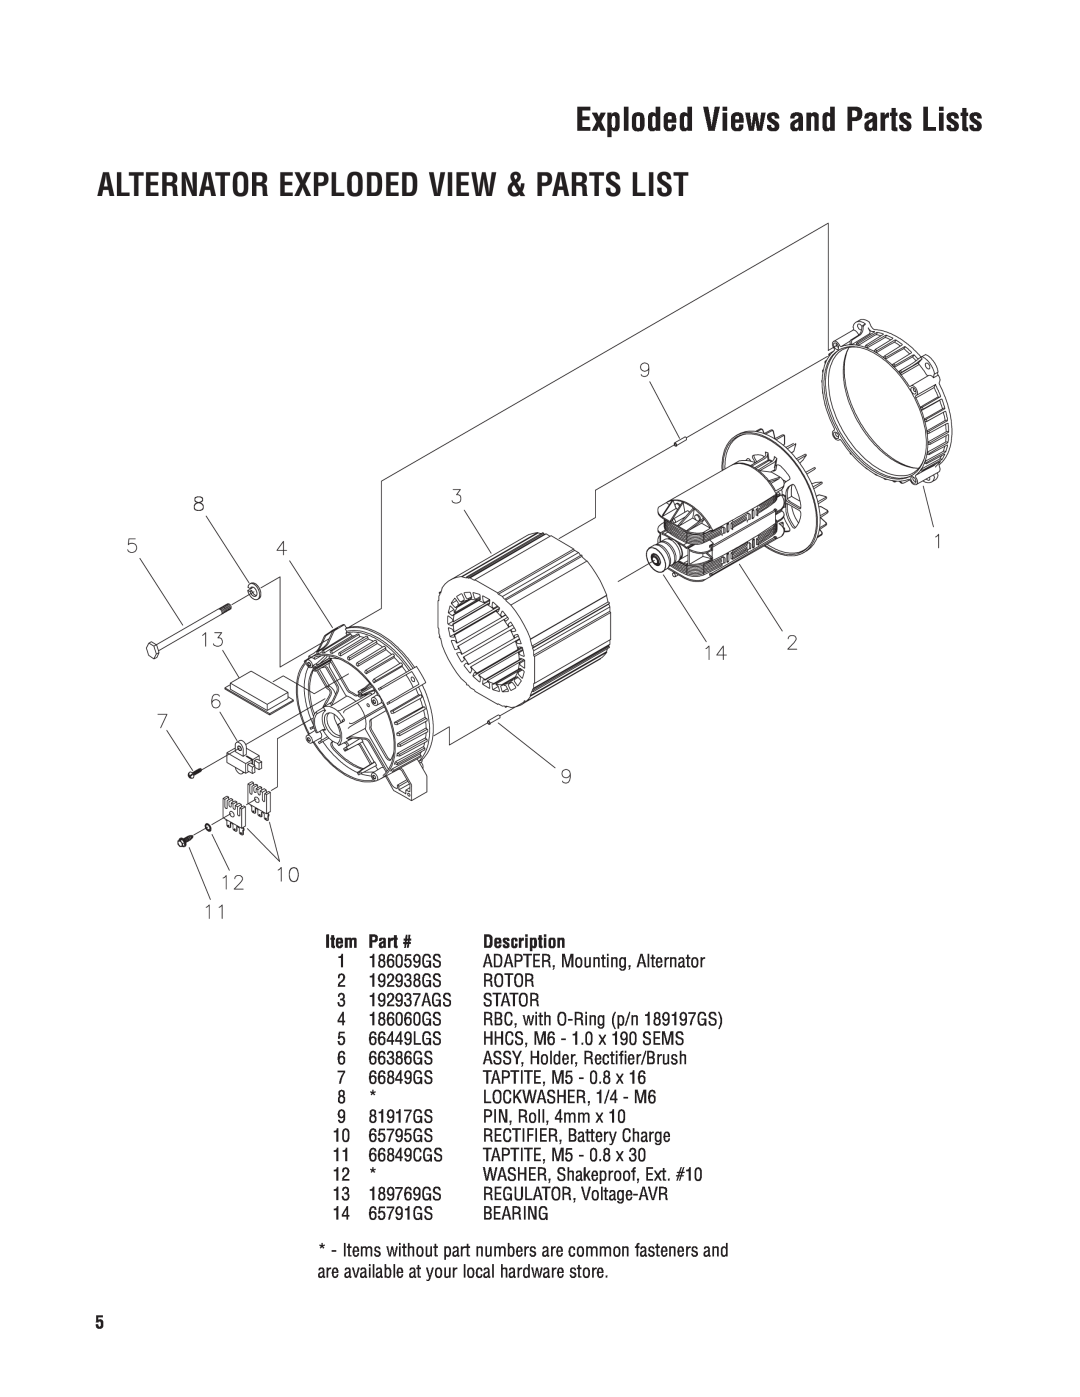 Briggs & Stratton 30382 manual Alternator Exploded View & Parts List, Exploded Views and Parts Lists 